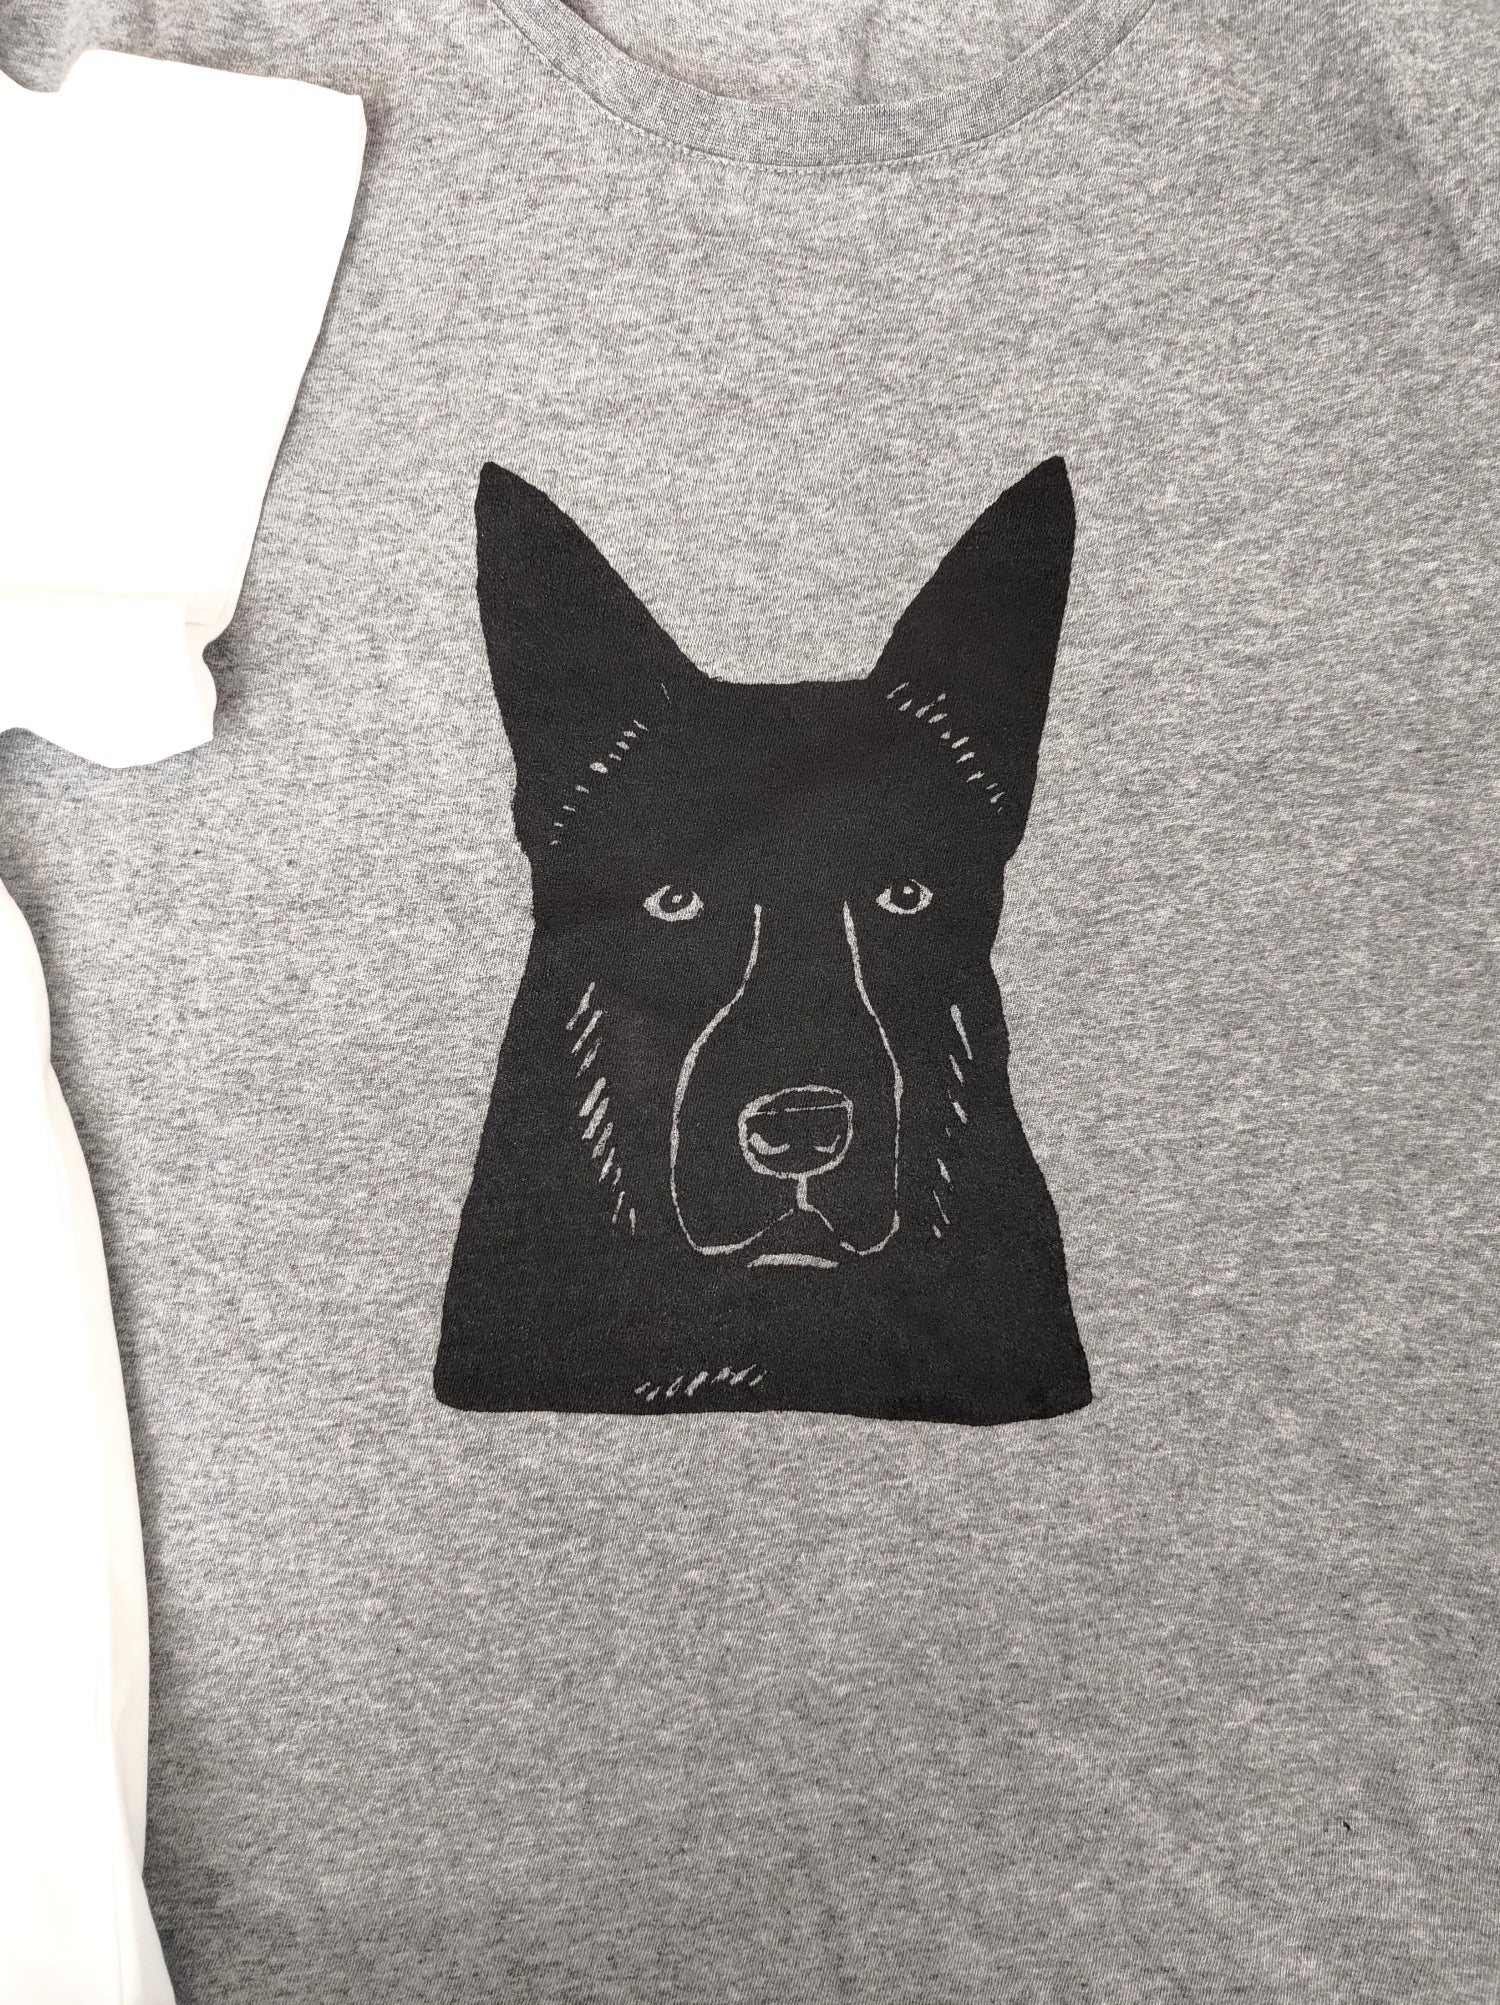 German Shepherd Akita dog t-shirt Carla Ventresca Miller Art